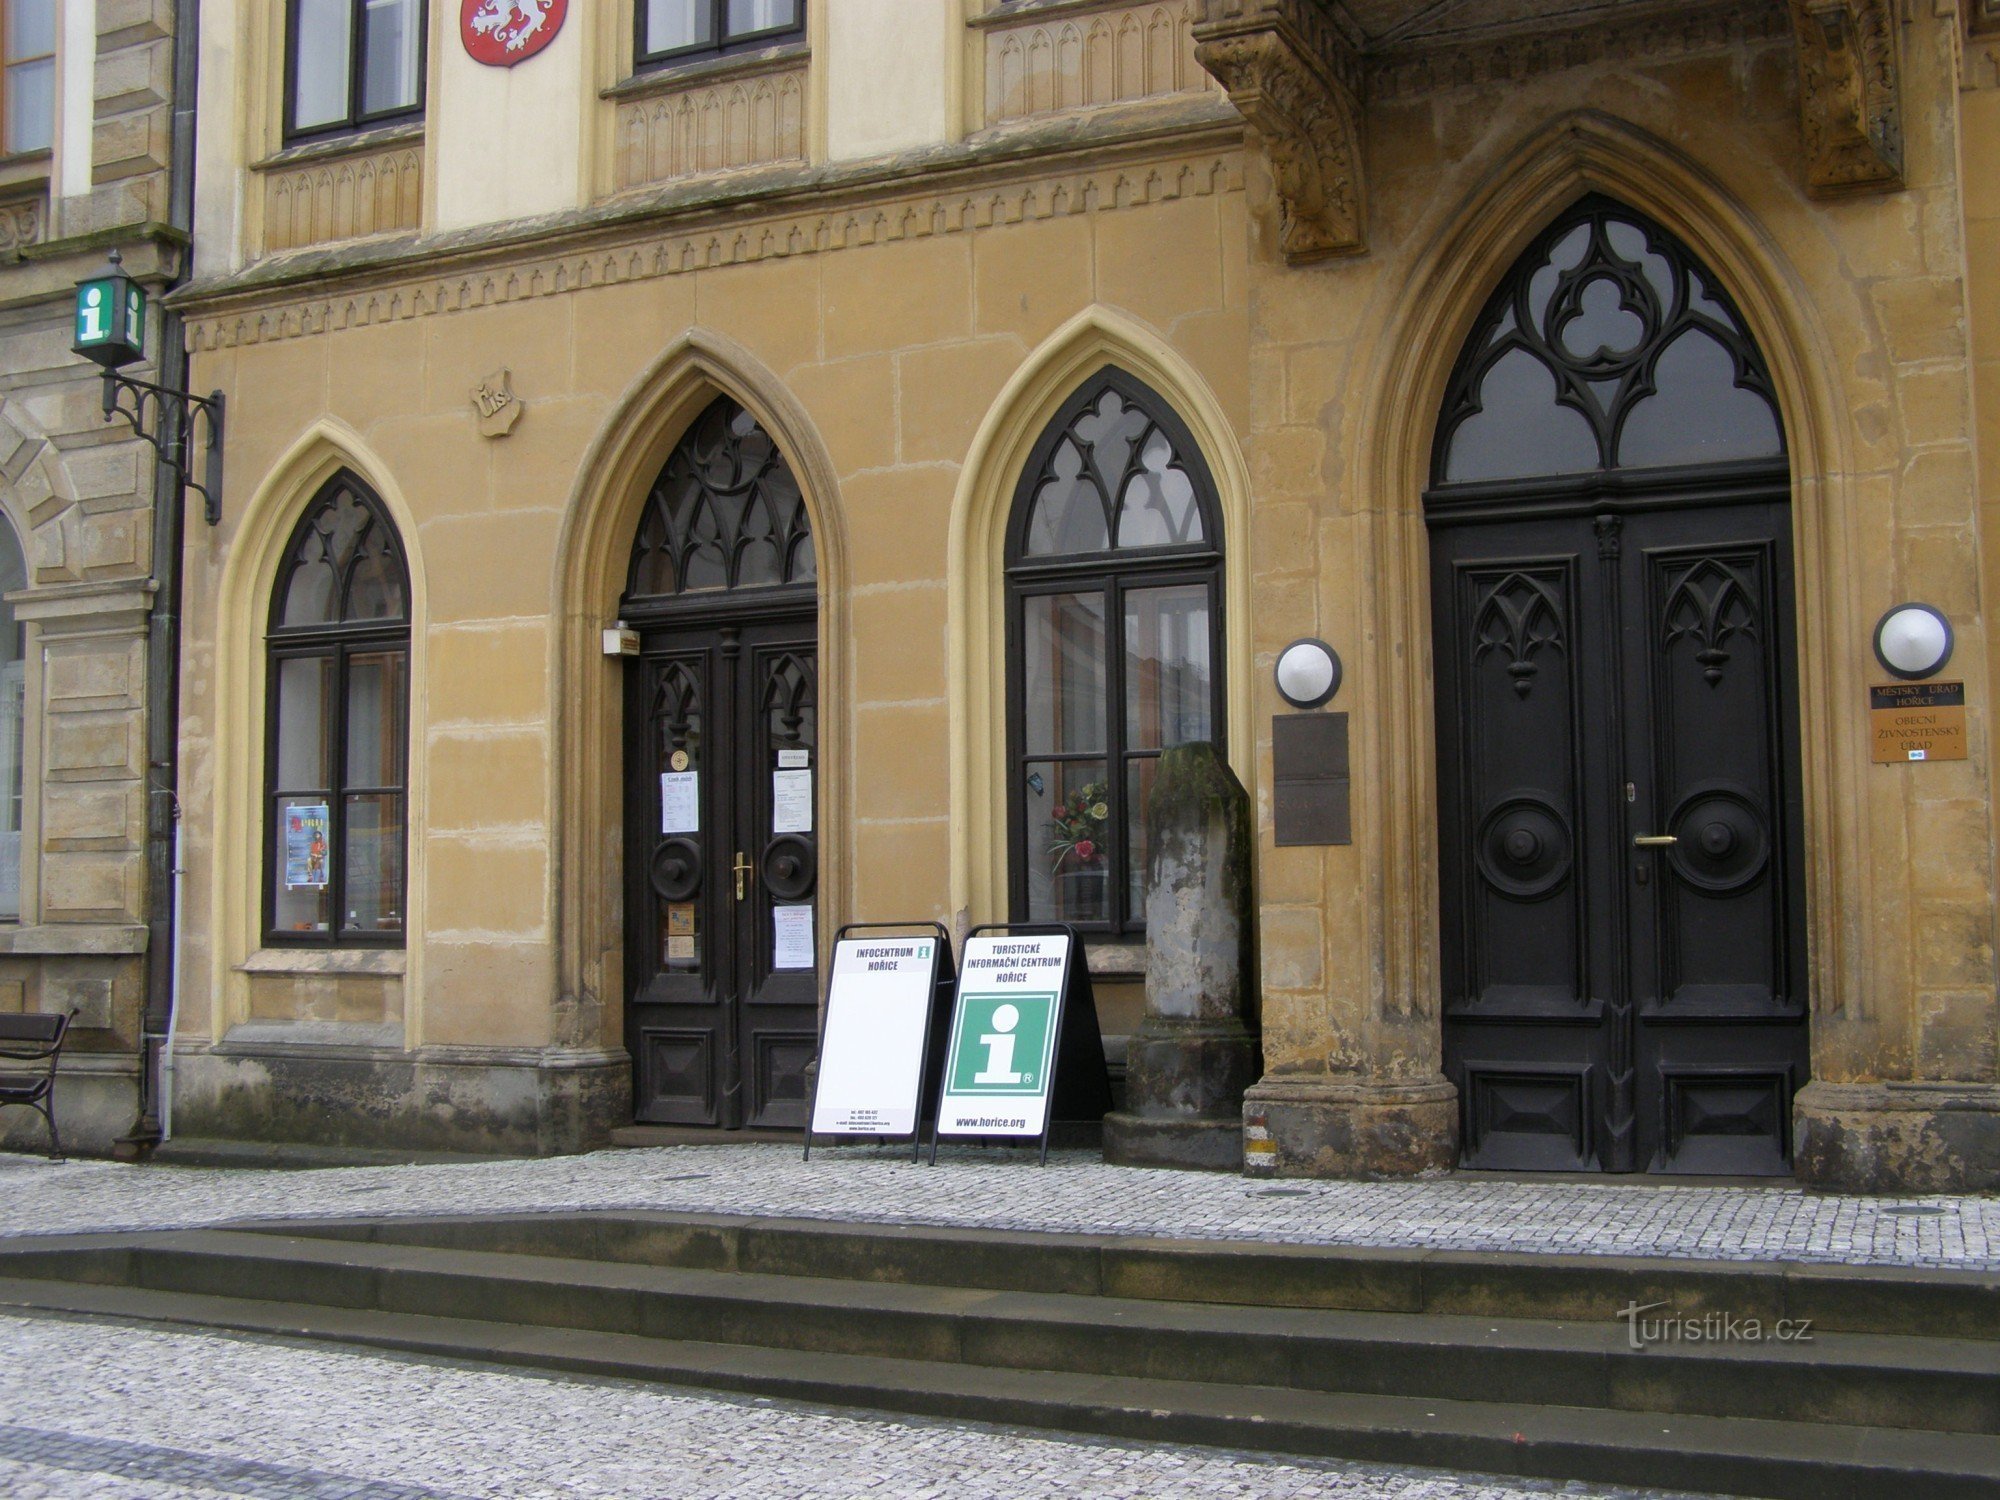 Hořice - centrum informacyjne